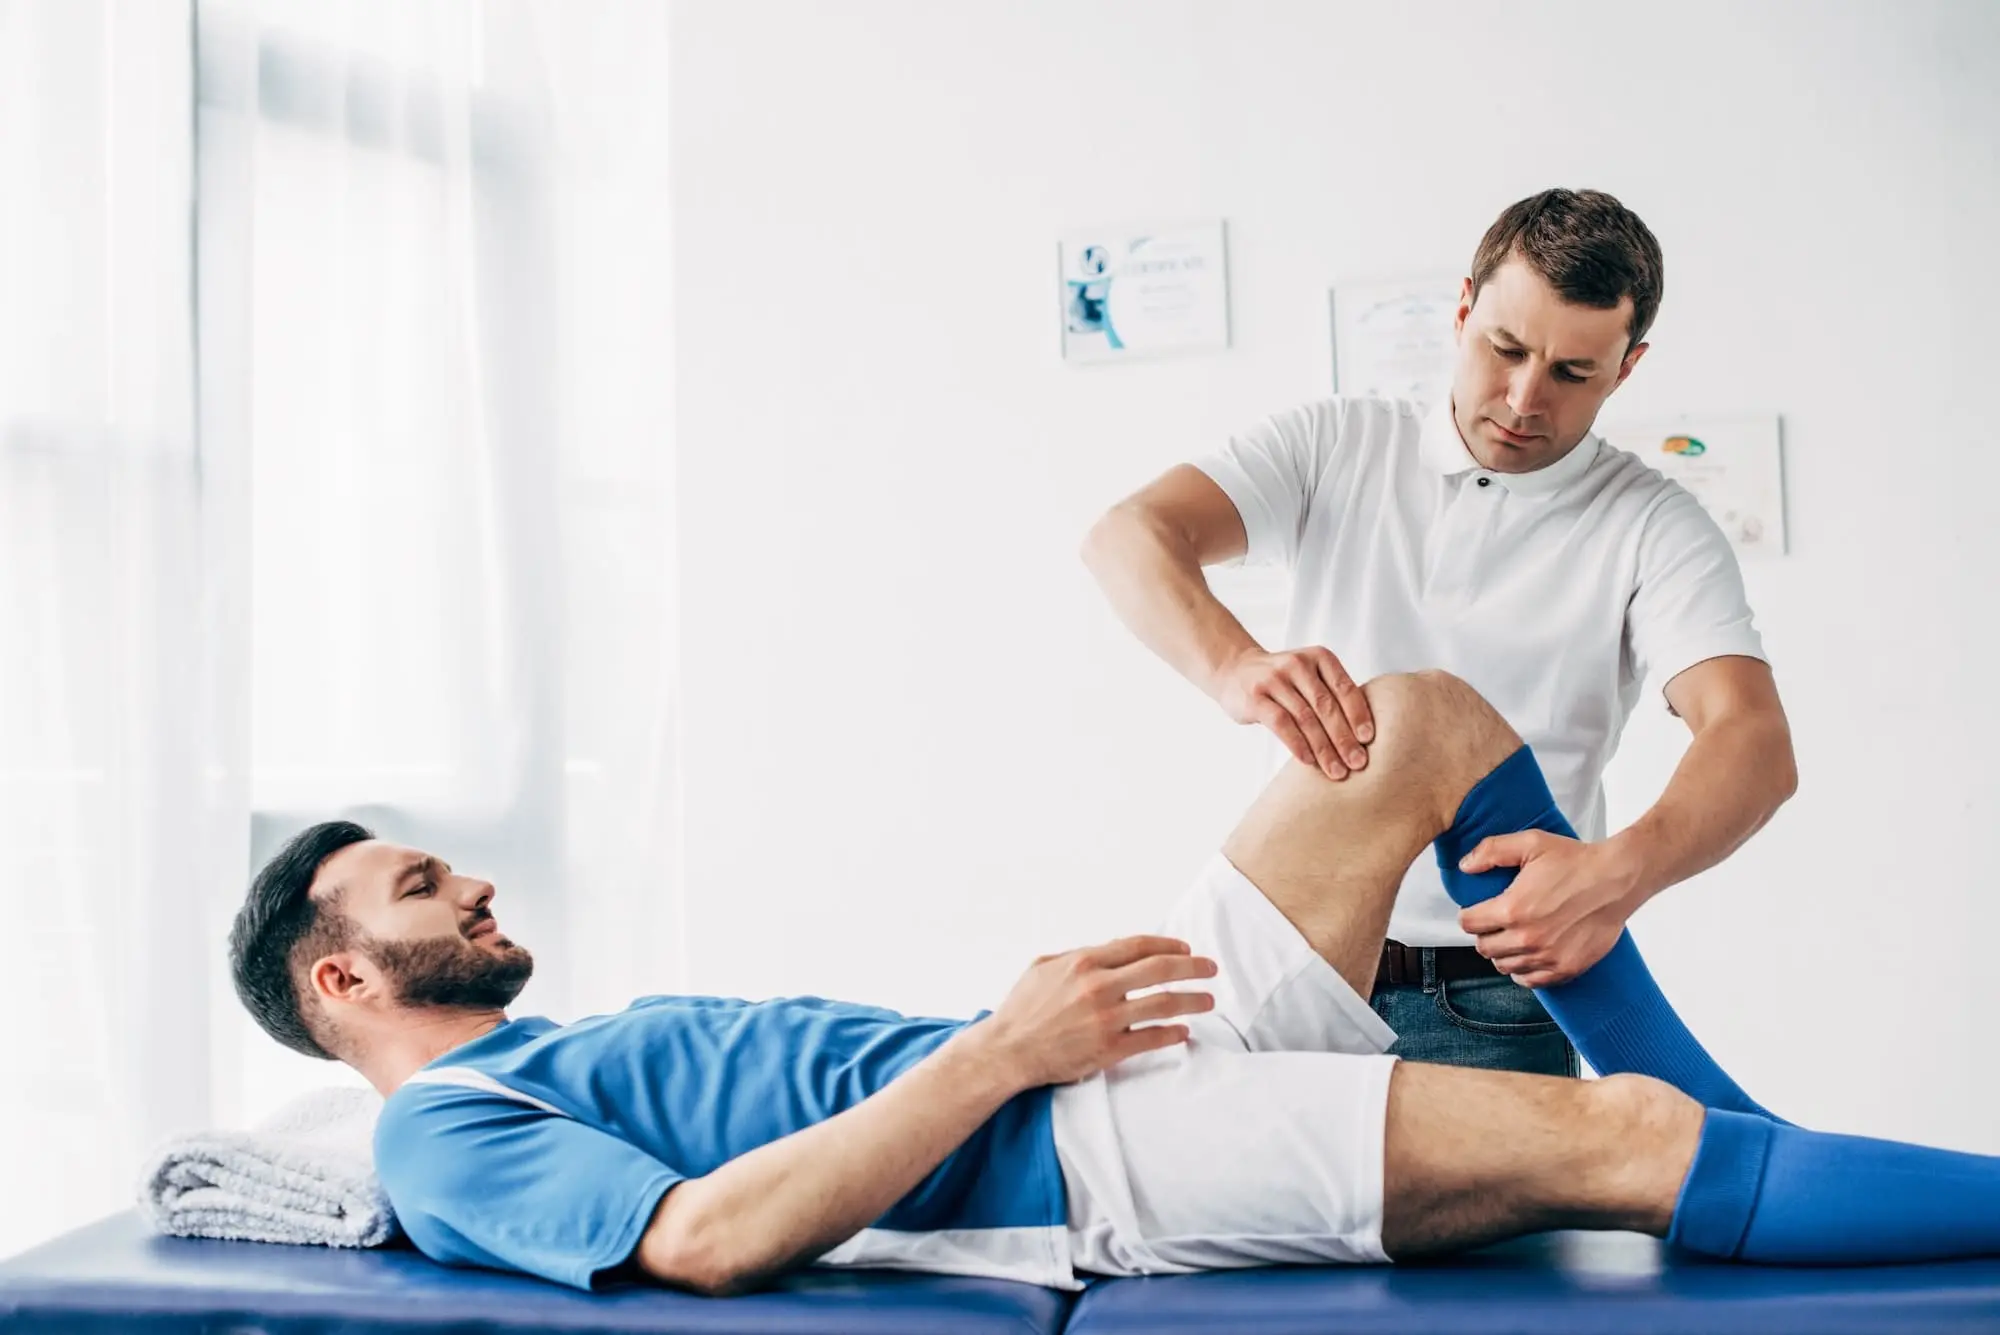 Physiotherapist Massaging Leg Of Football Player L 2022 12 16 16 17 01 Utc